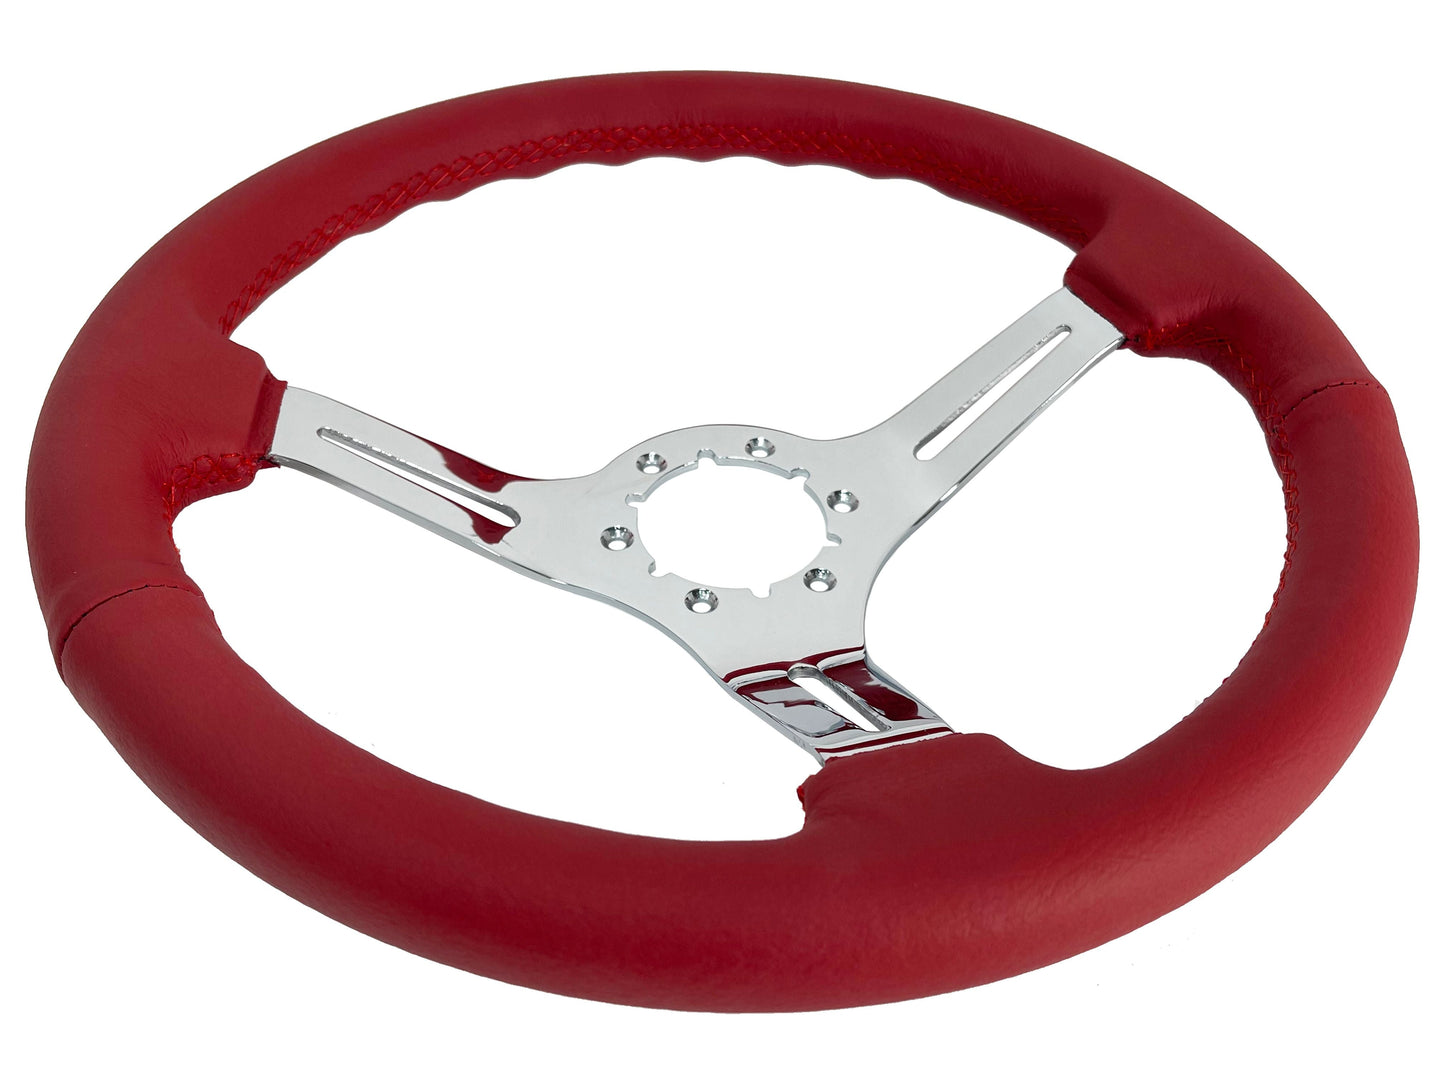 Mazda Miata Steering Wheel Kit | Red Leather | ST3012RED